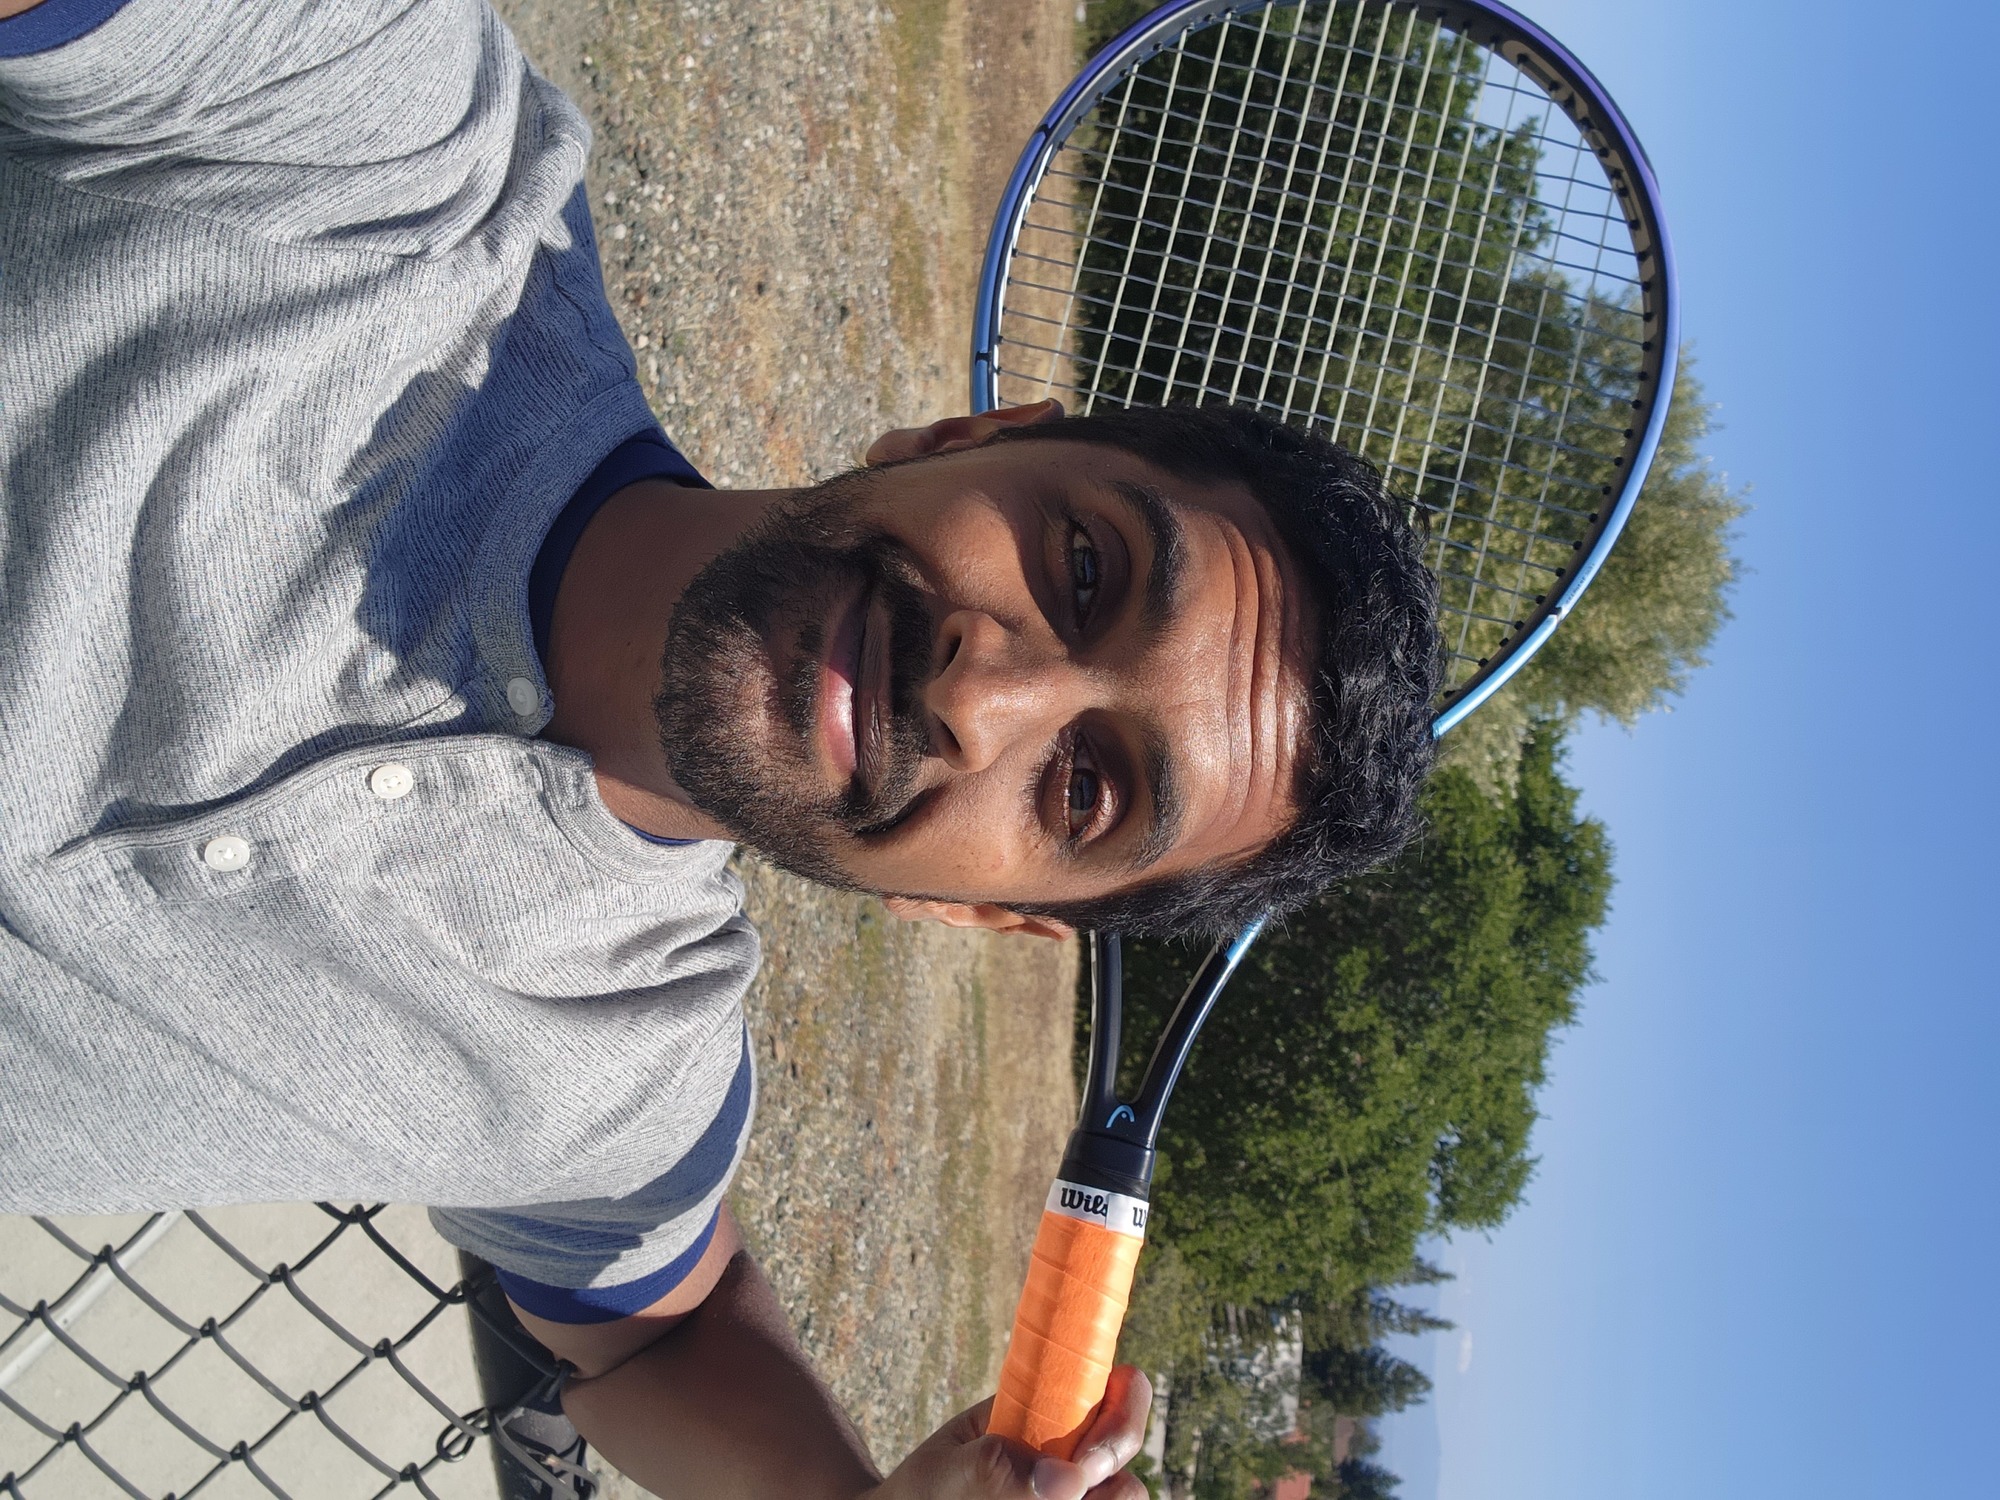 Vinodh N. teaches tennis lessons in San Jose, CA